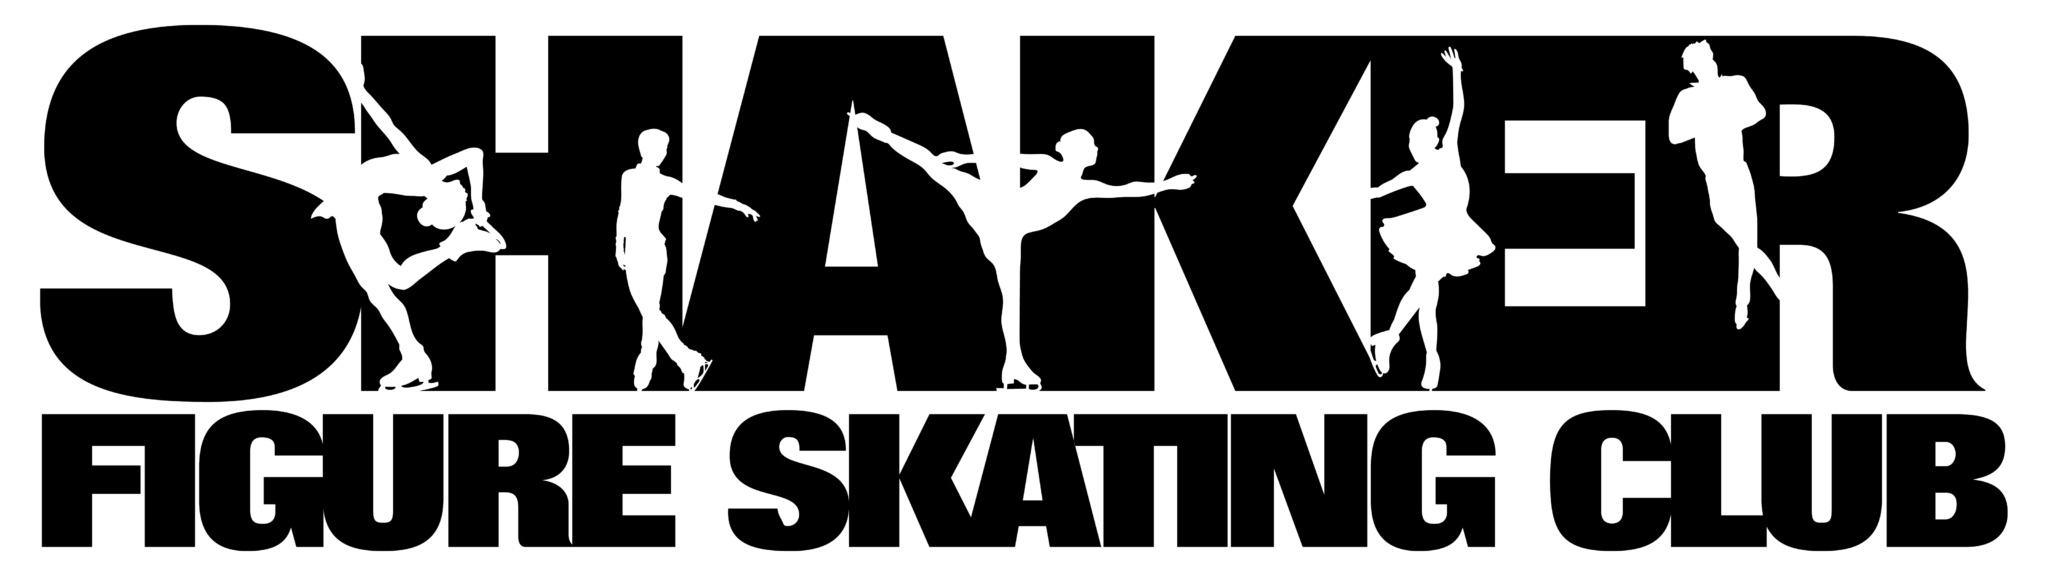 Shaker Figure Skating Club – Figure Skating at its best